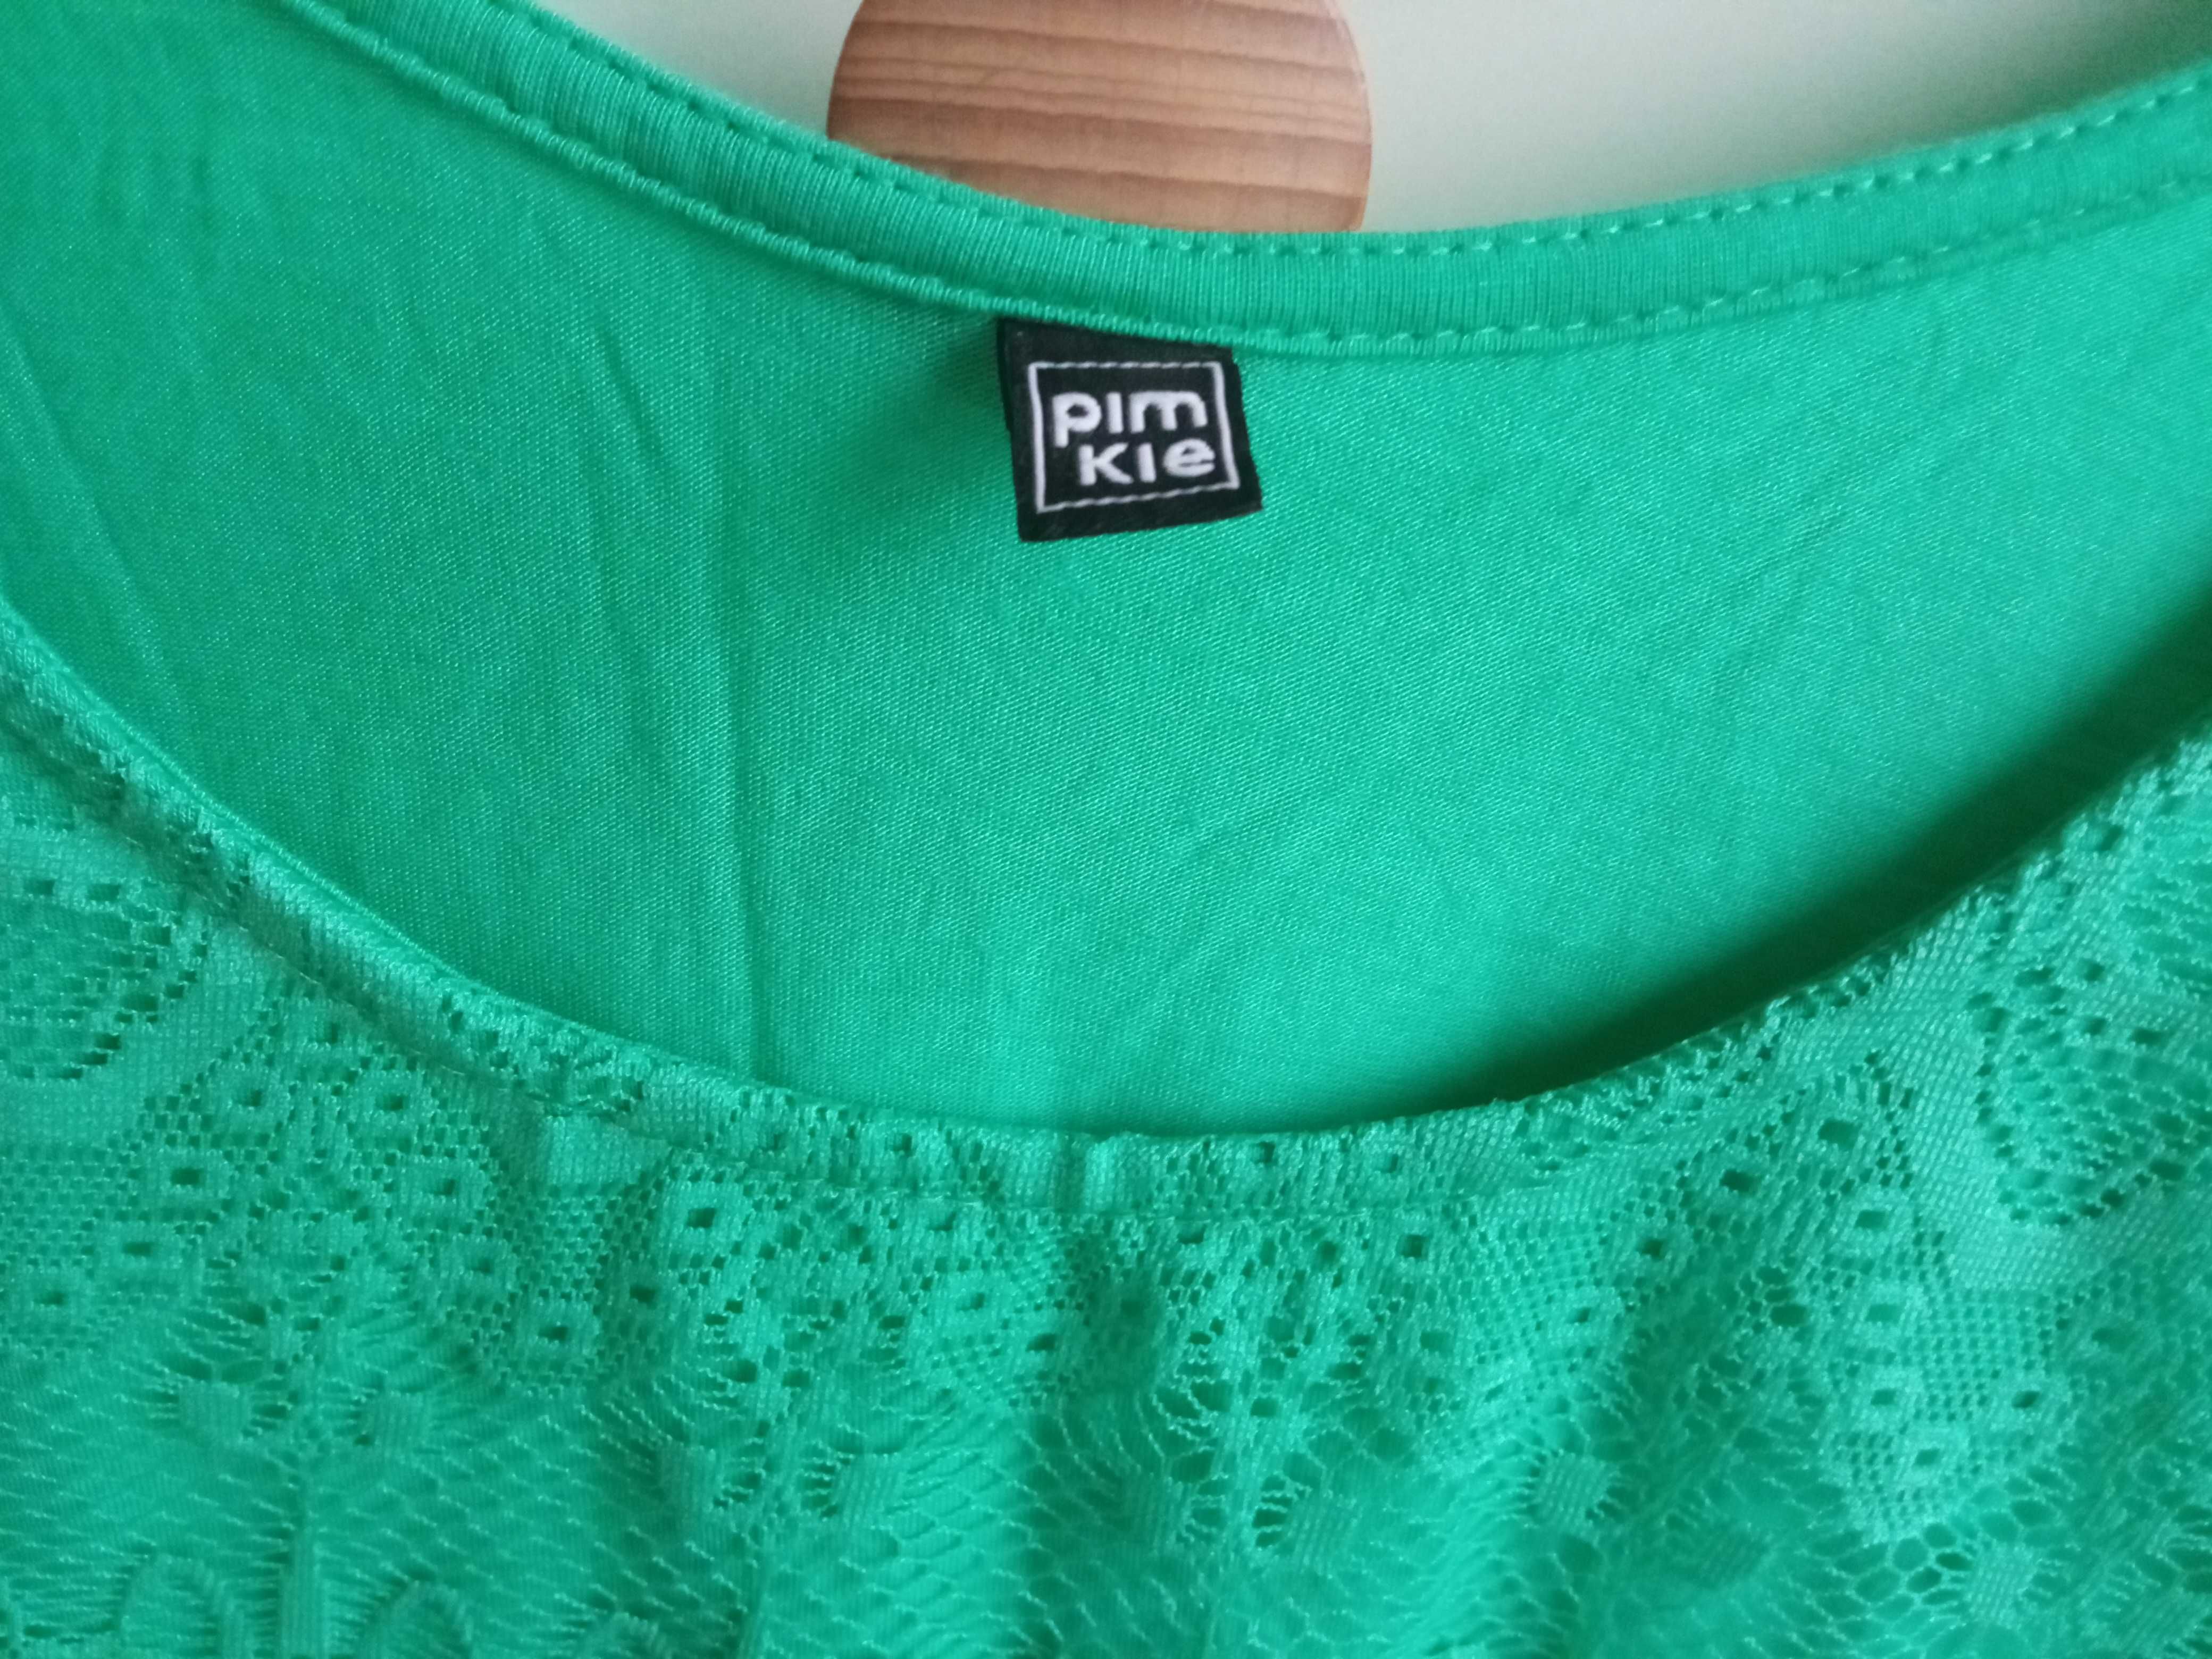 Bluzka top koszulka koronkowa pimkie zielona S 36